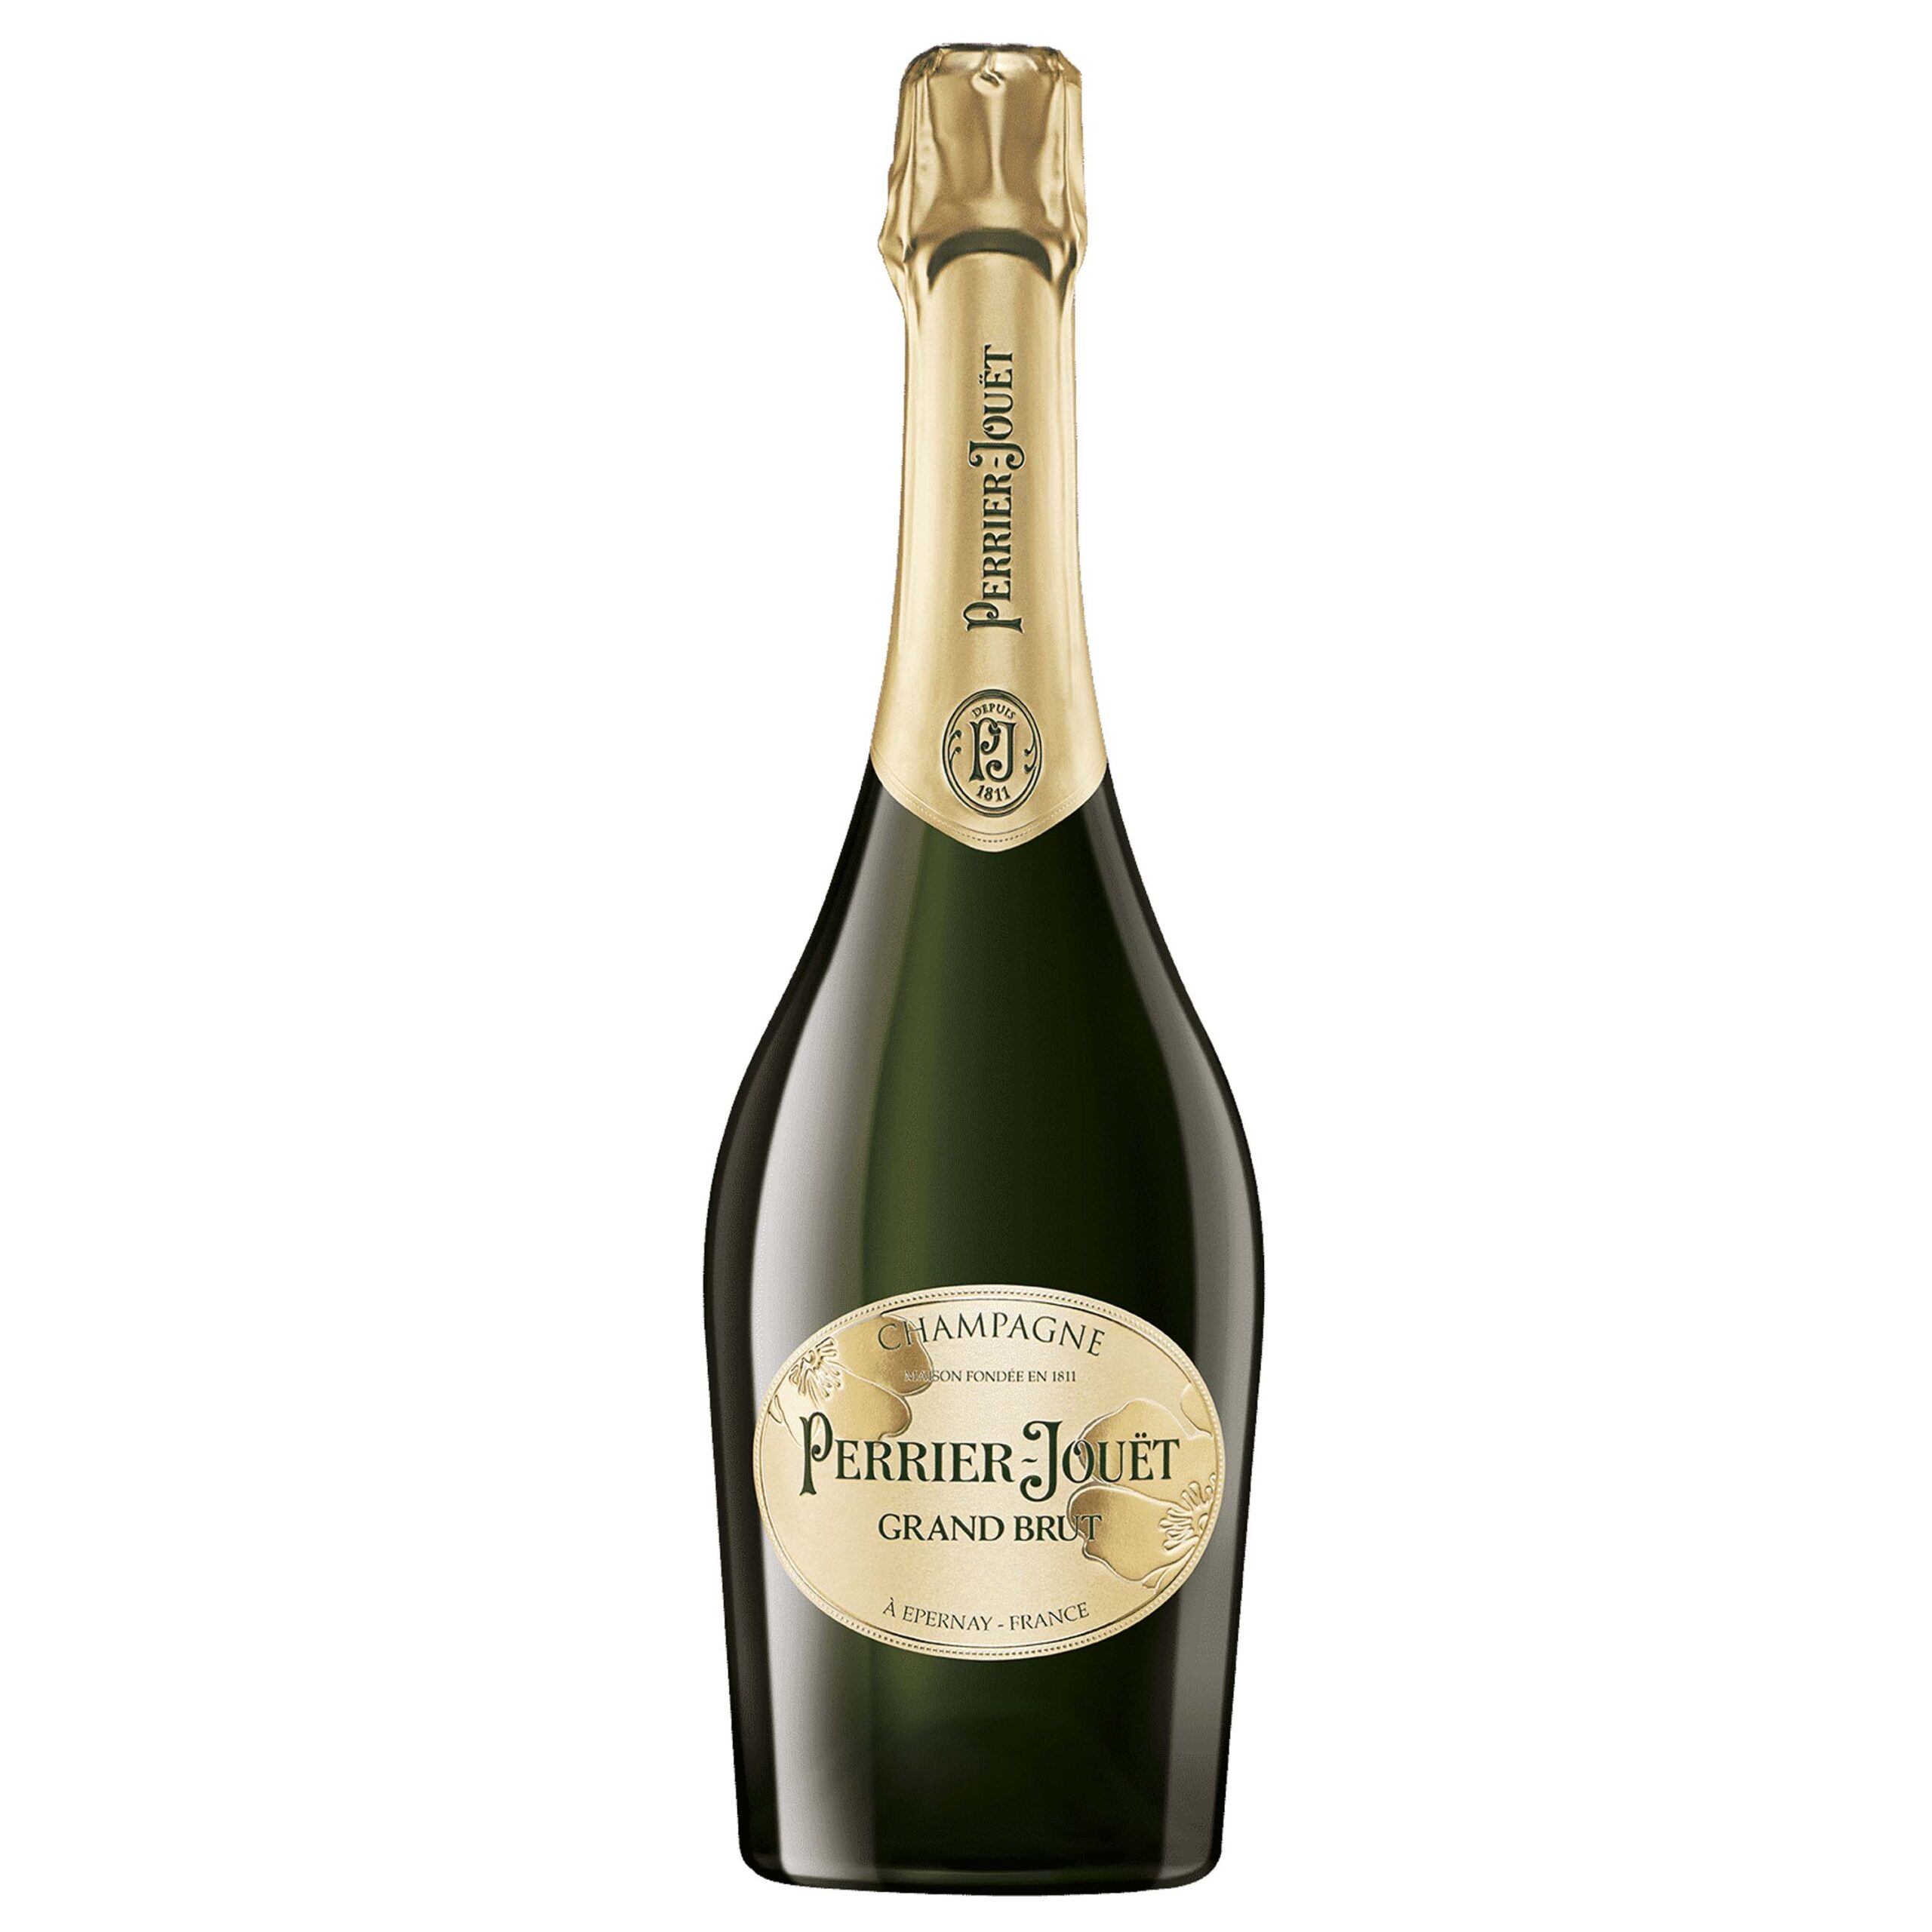 Bottle of Perrier Jouet Brut champagne